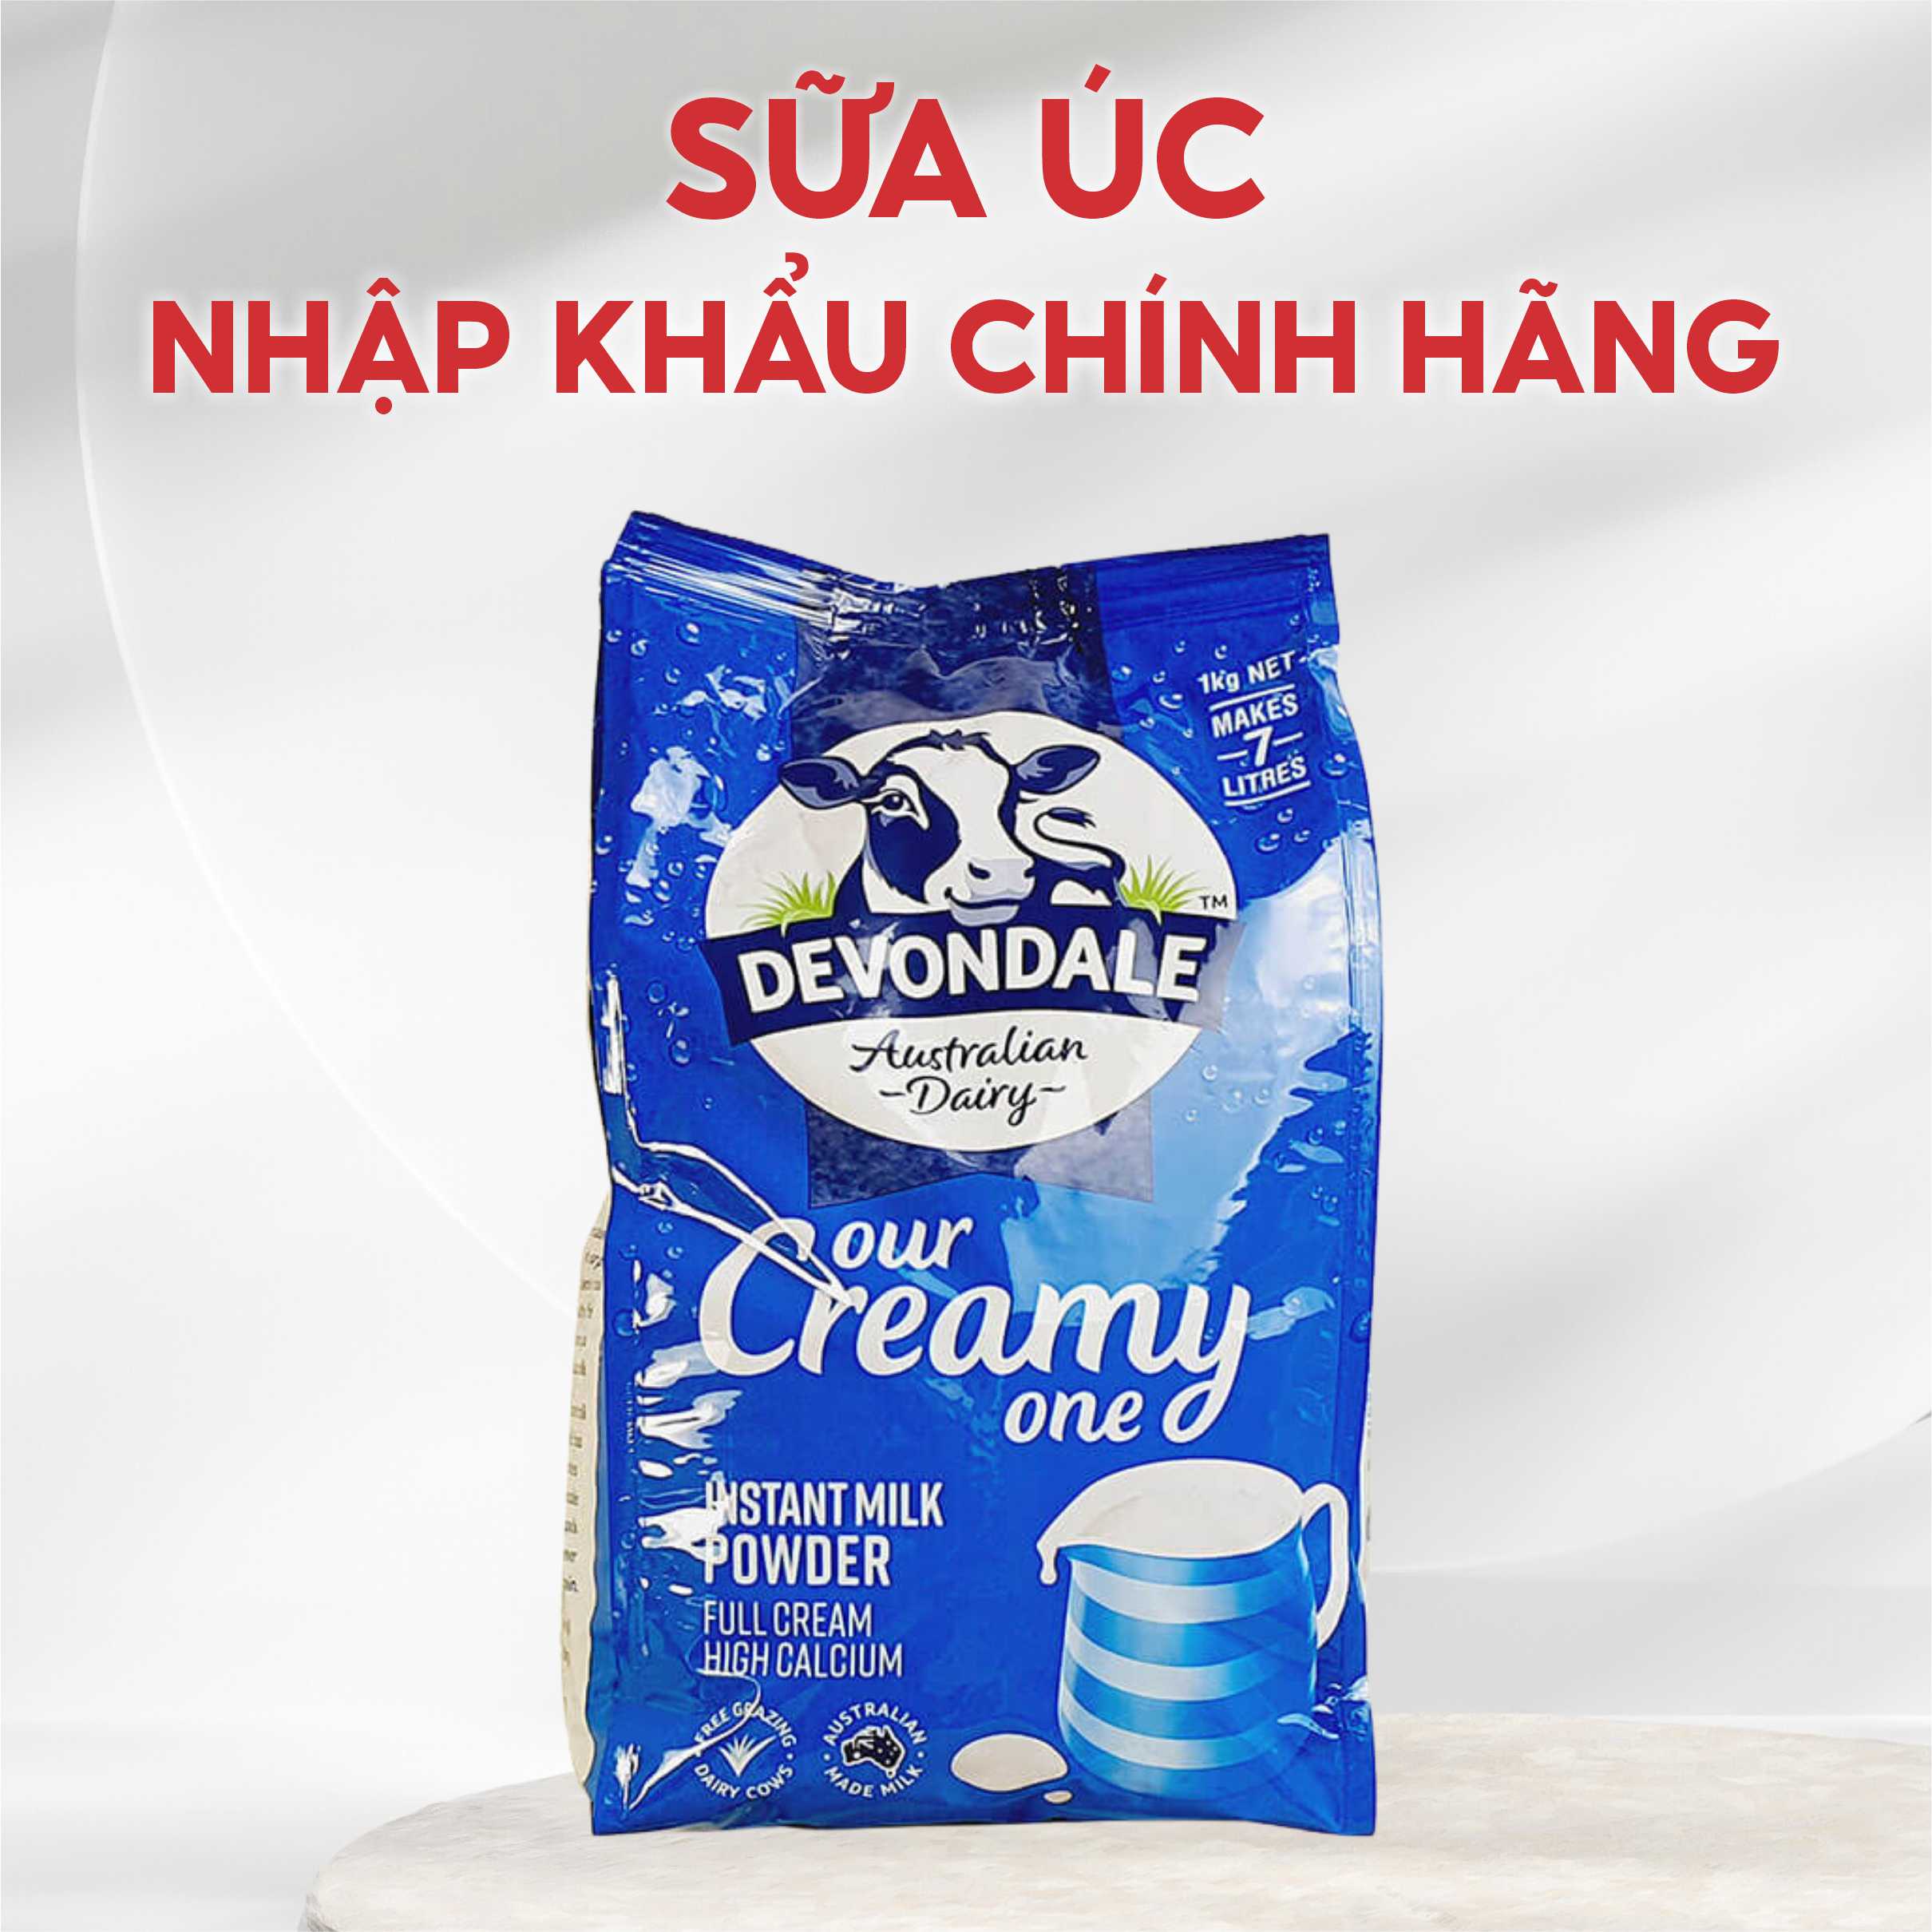 Sữa bột Devondale bịch 1 kg nhập từ Úc